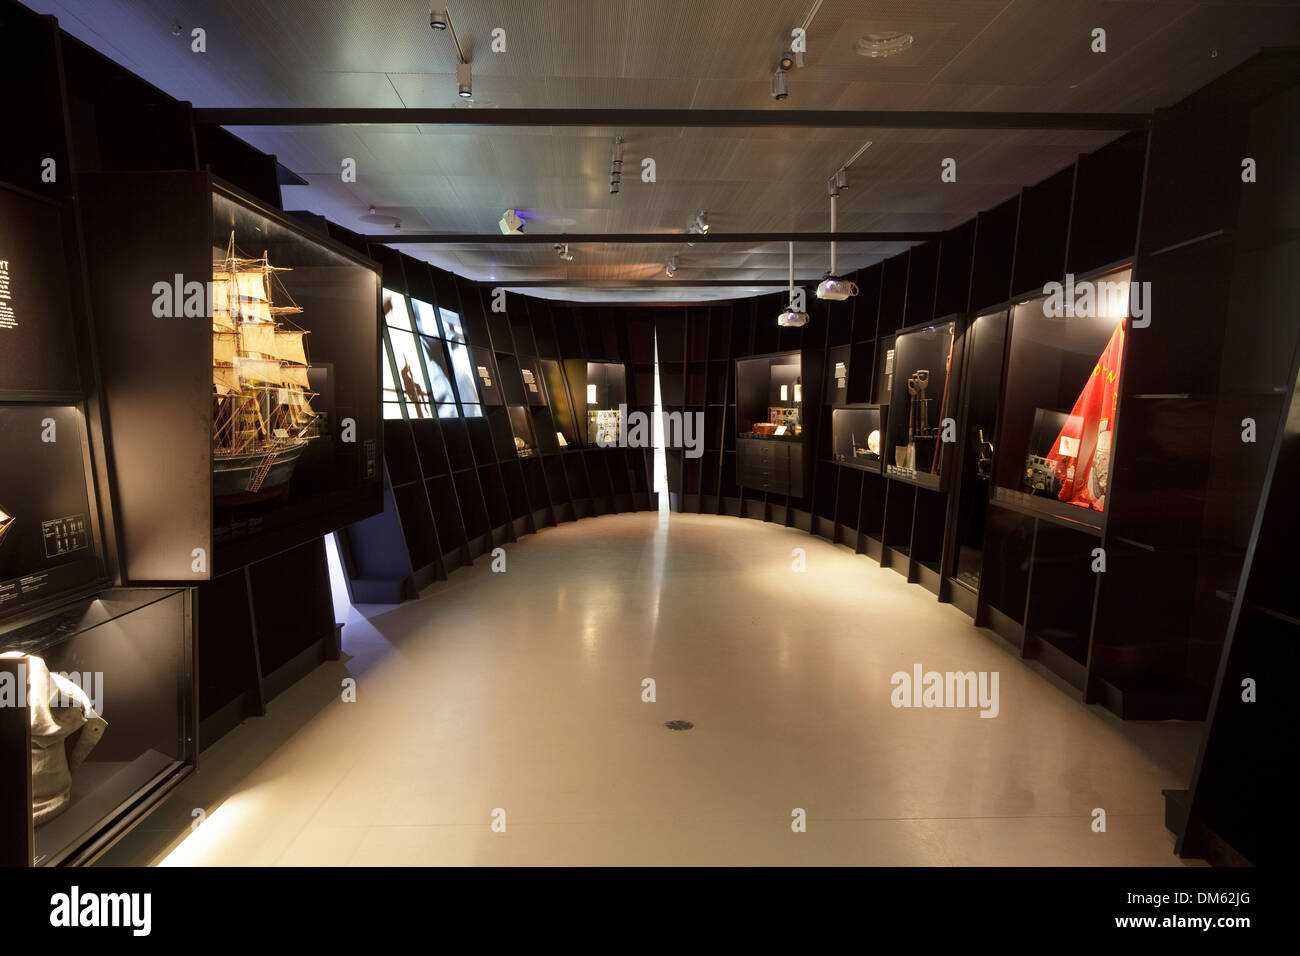 Danish Maritime Museum (M/S Museet for Sofart), Helsingor, Denmark. Architect: Bjarke Ingels Group (BIG), 2013. Interior of exhi Stock Photo